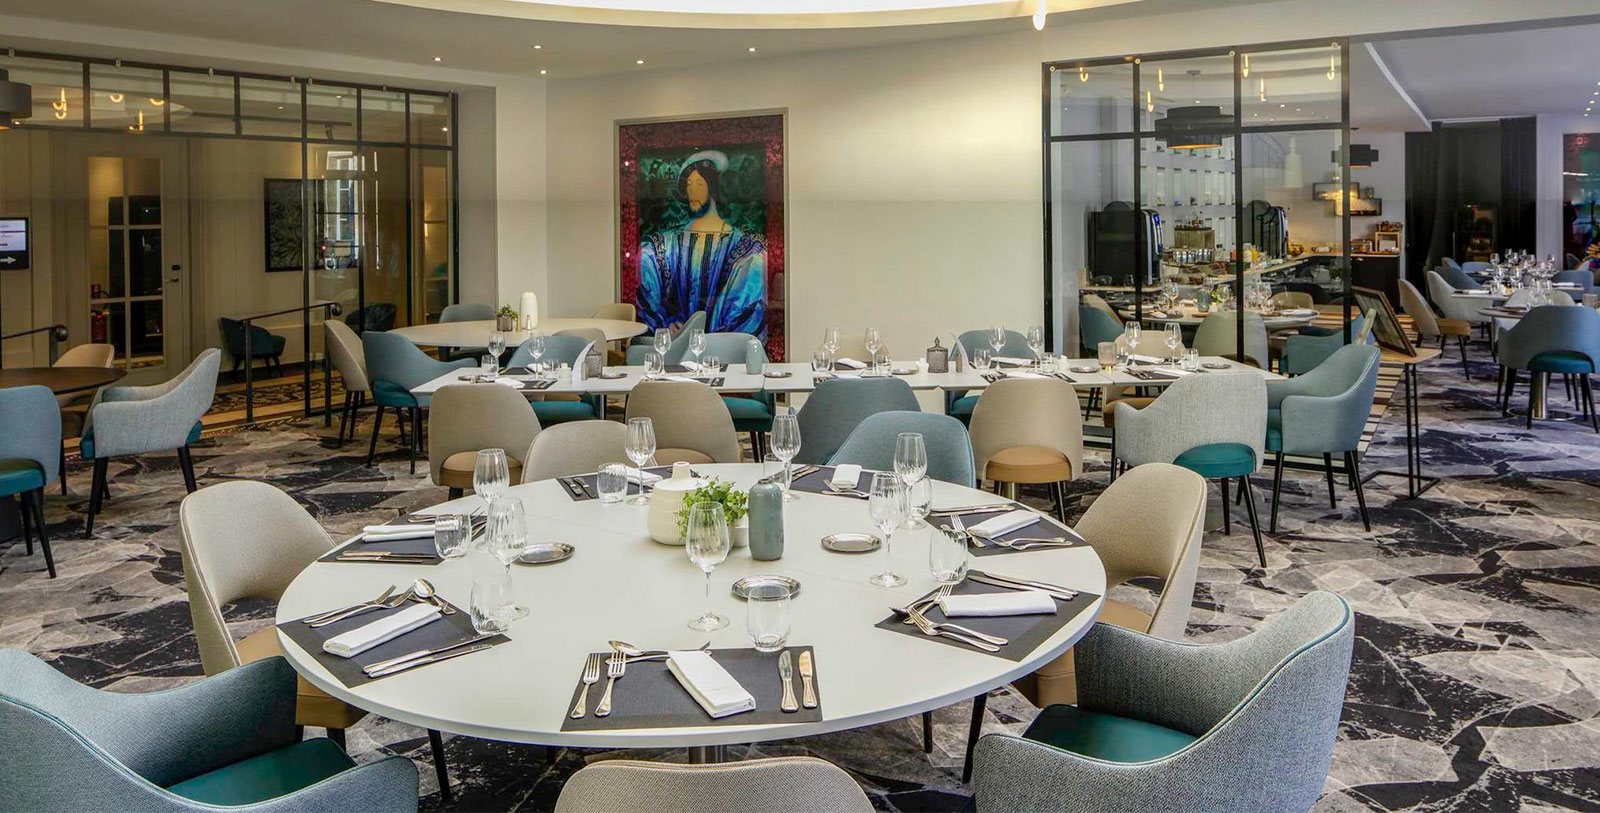 Image of Dining Room, Mercure Angouleme Hotel de France, established 1600, member of Historic Hotels Worldwide 2019, France, Europe, Dining